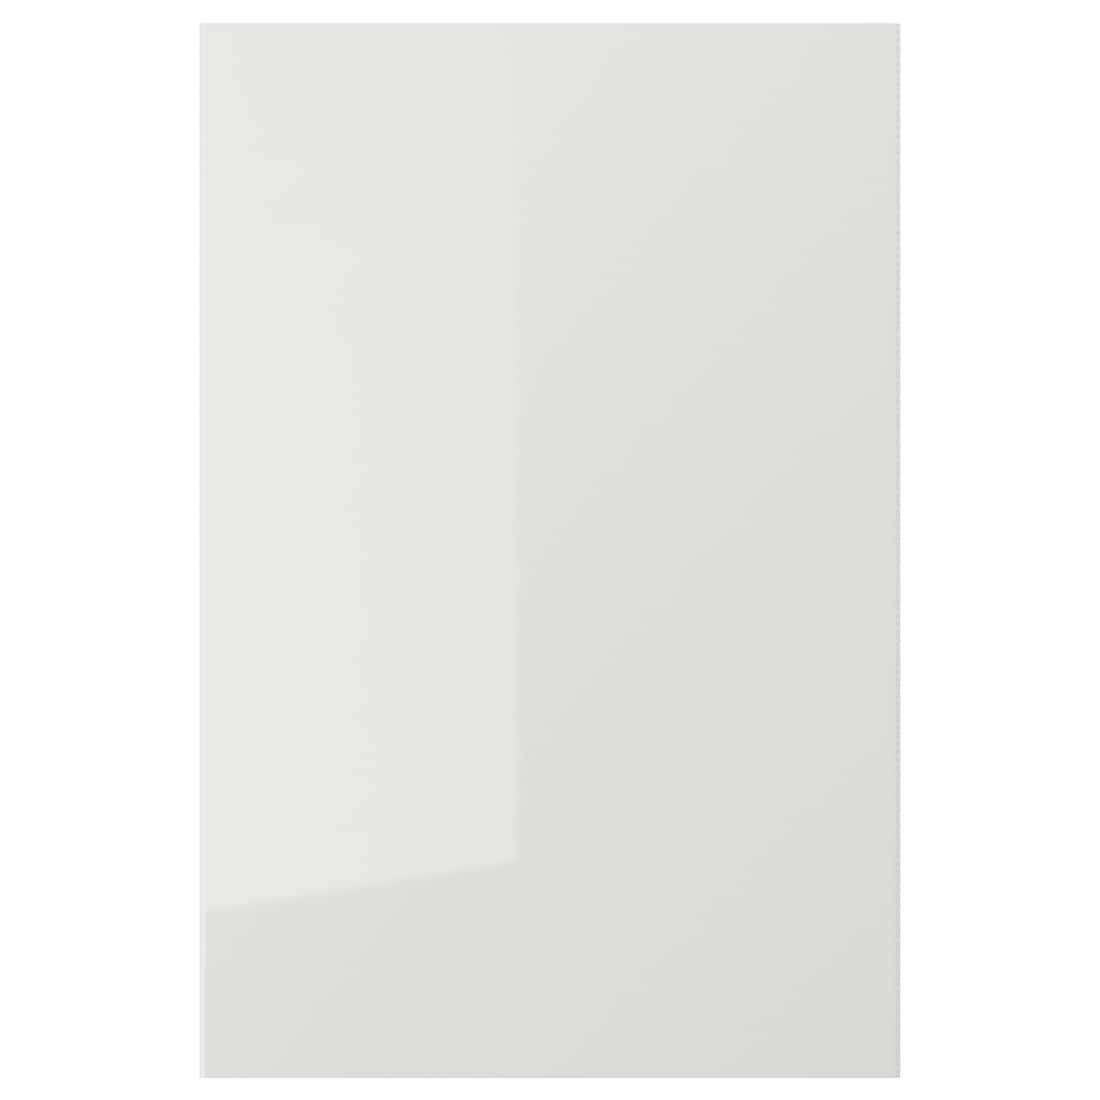 IKEA RINGHULT РИНГУЛЬТ Дверь, глянцевый светло-серый, 40x60 см 60327137 603.271.37